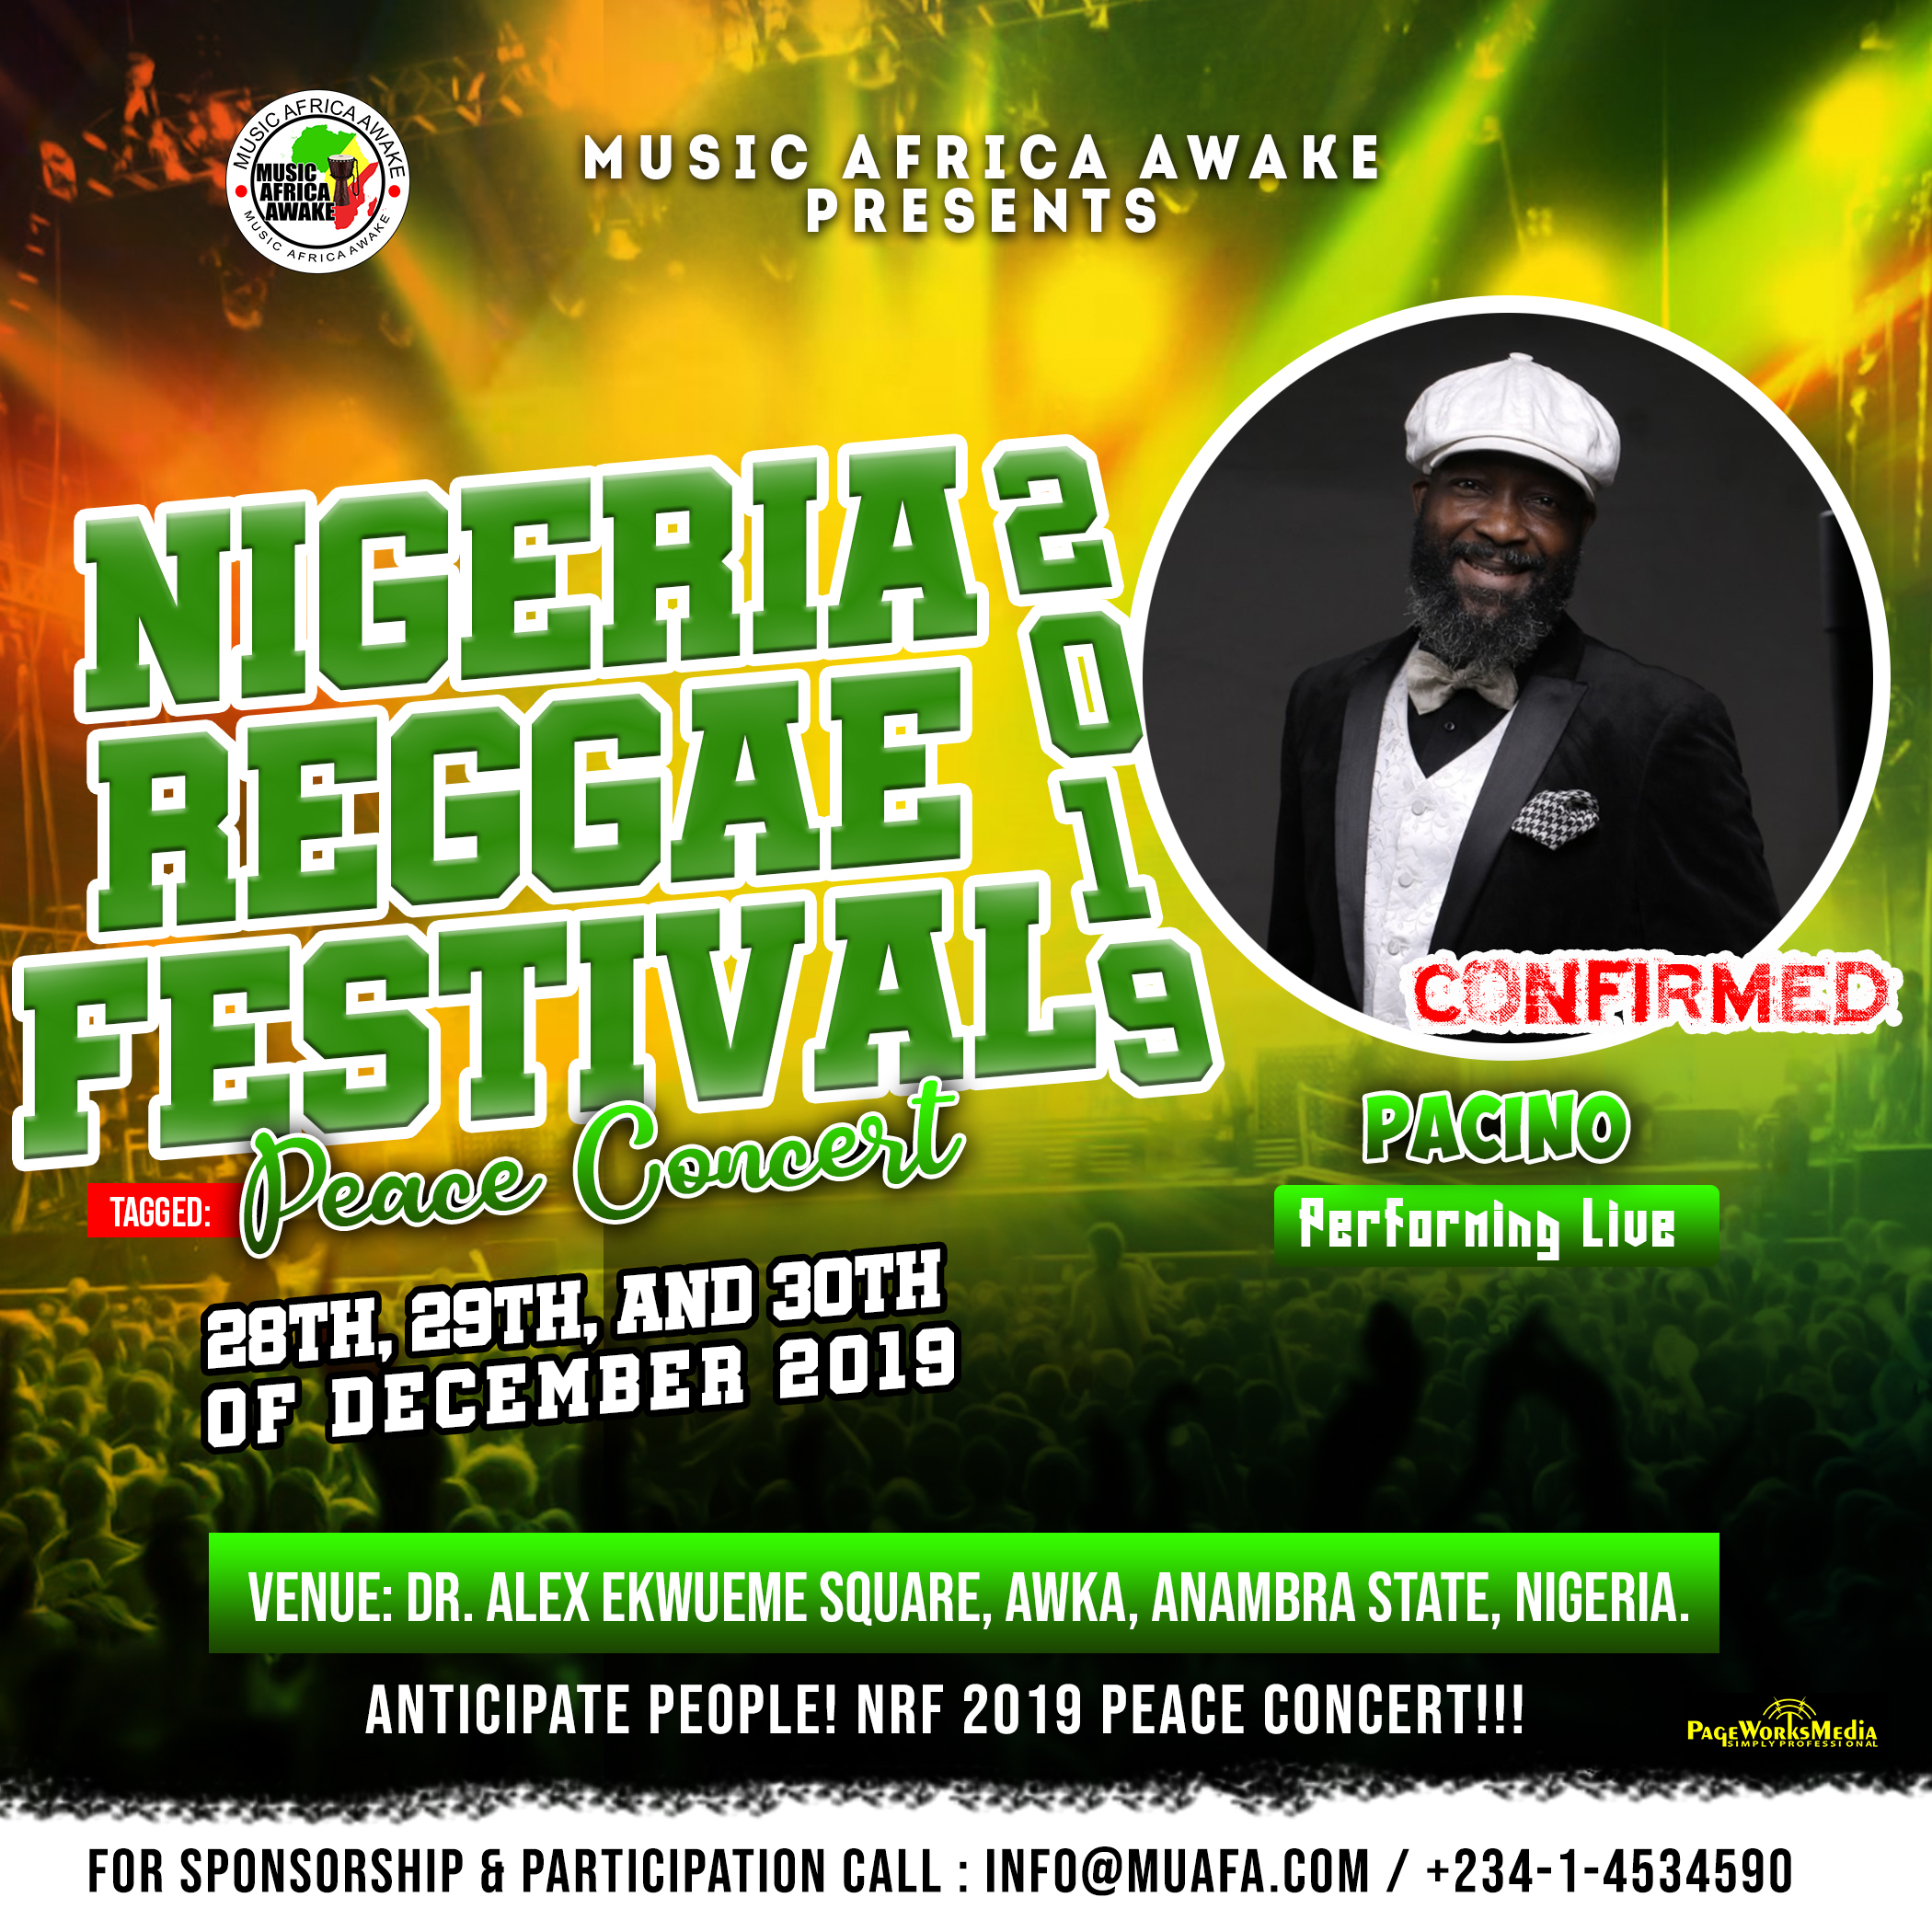 Pacino to perform live at the Nigeria Reggae Festival 2019